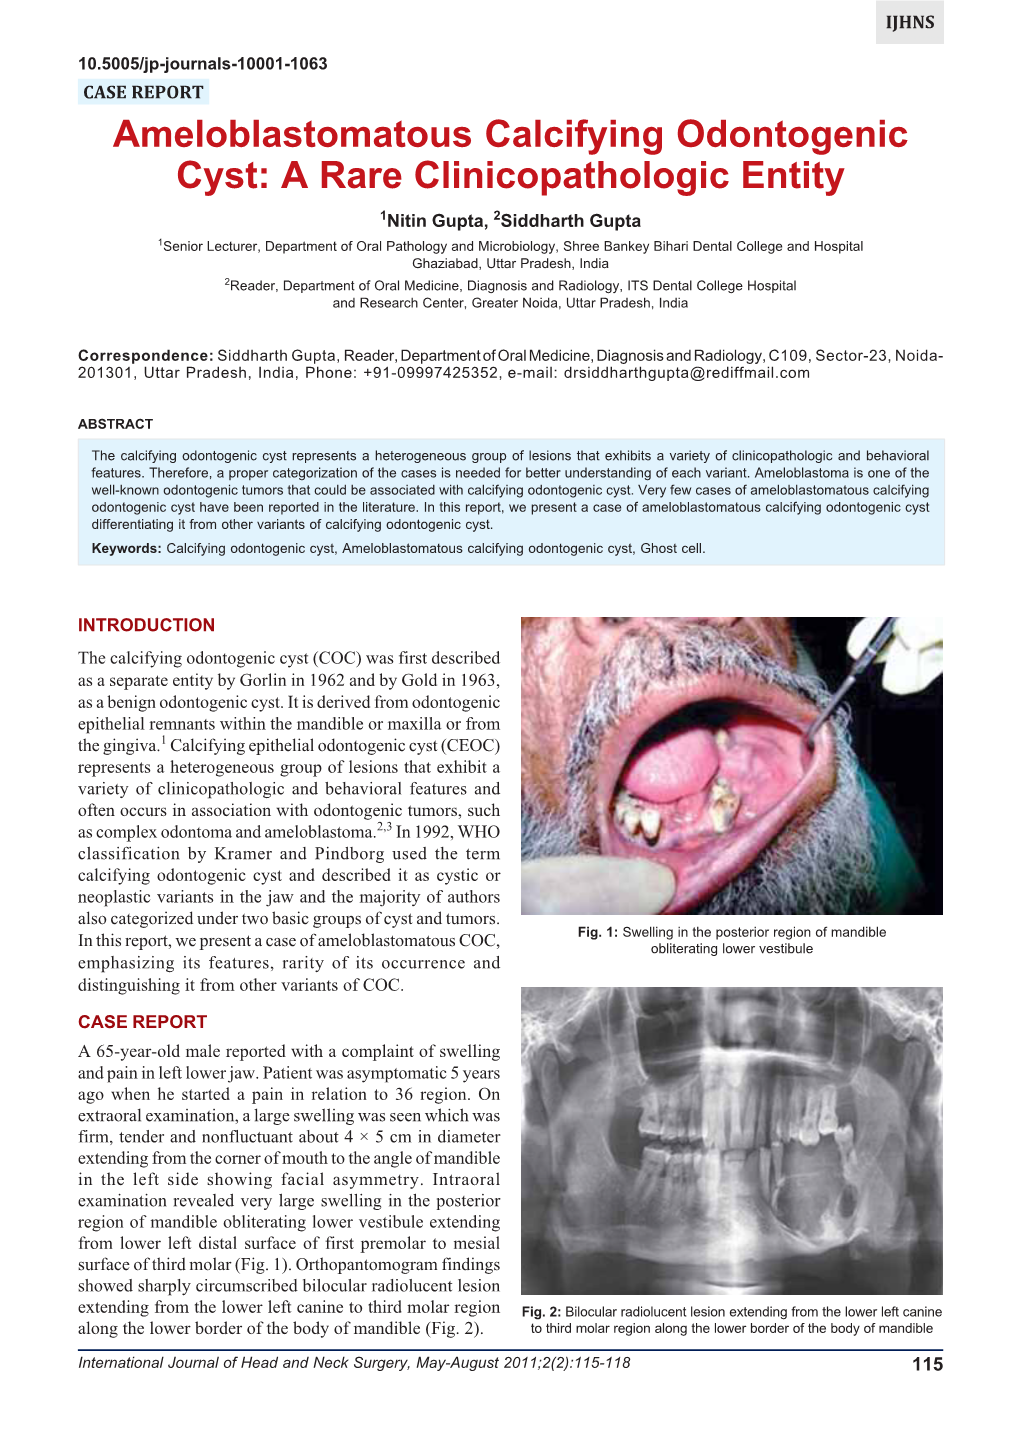 Ameloblastomatous Calcifying Odontogenic Cyst